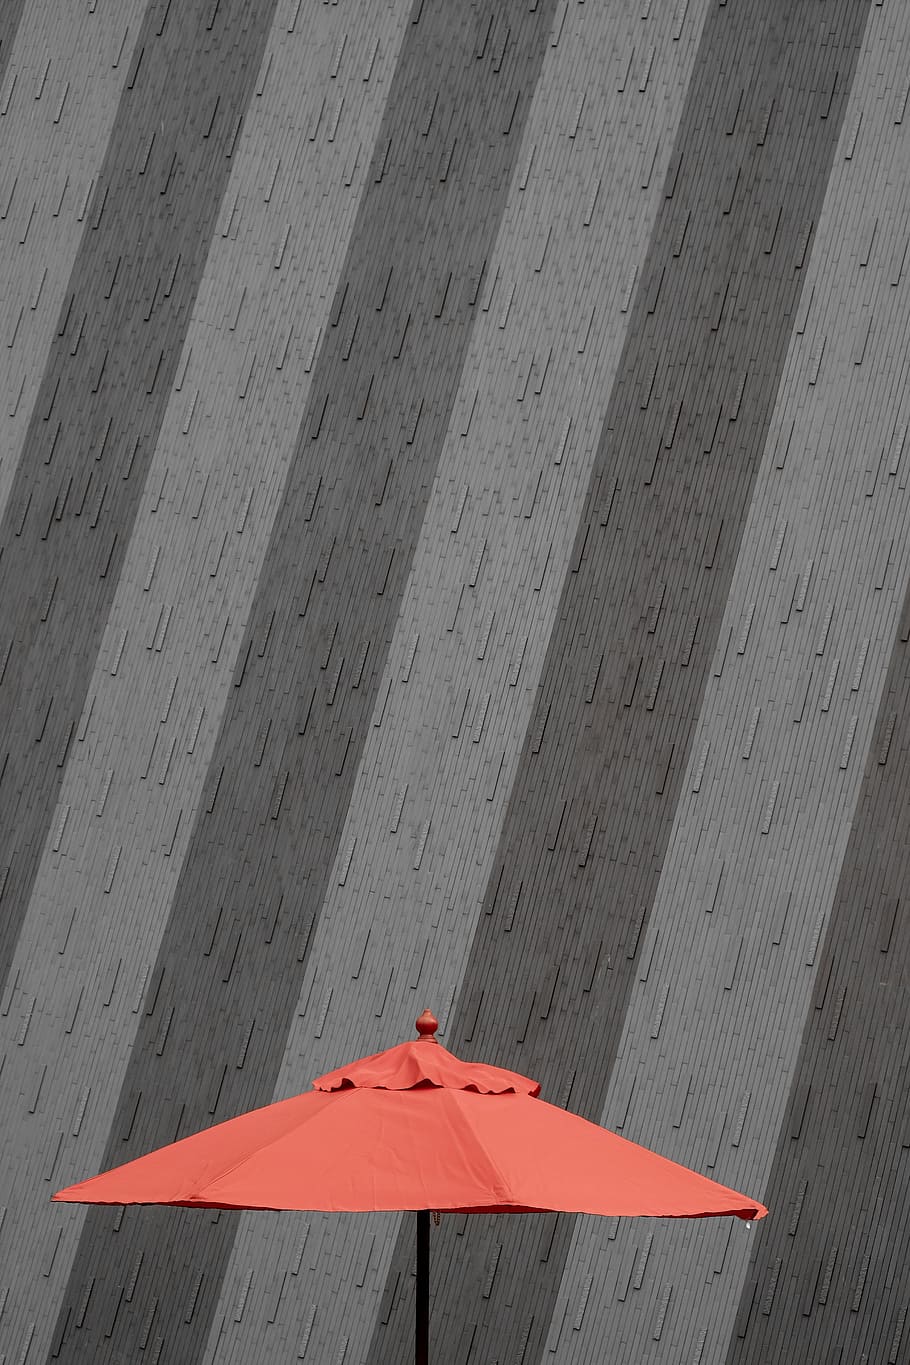 Closeup Photo of Red Patio Umbrella, architecture, building, city